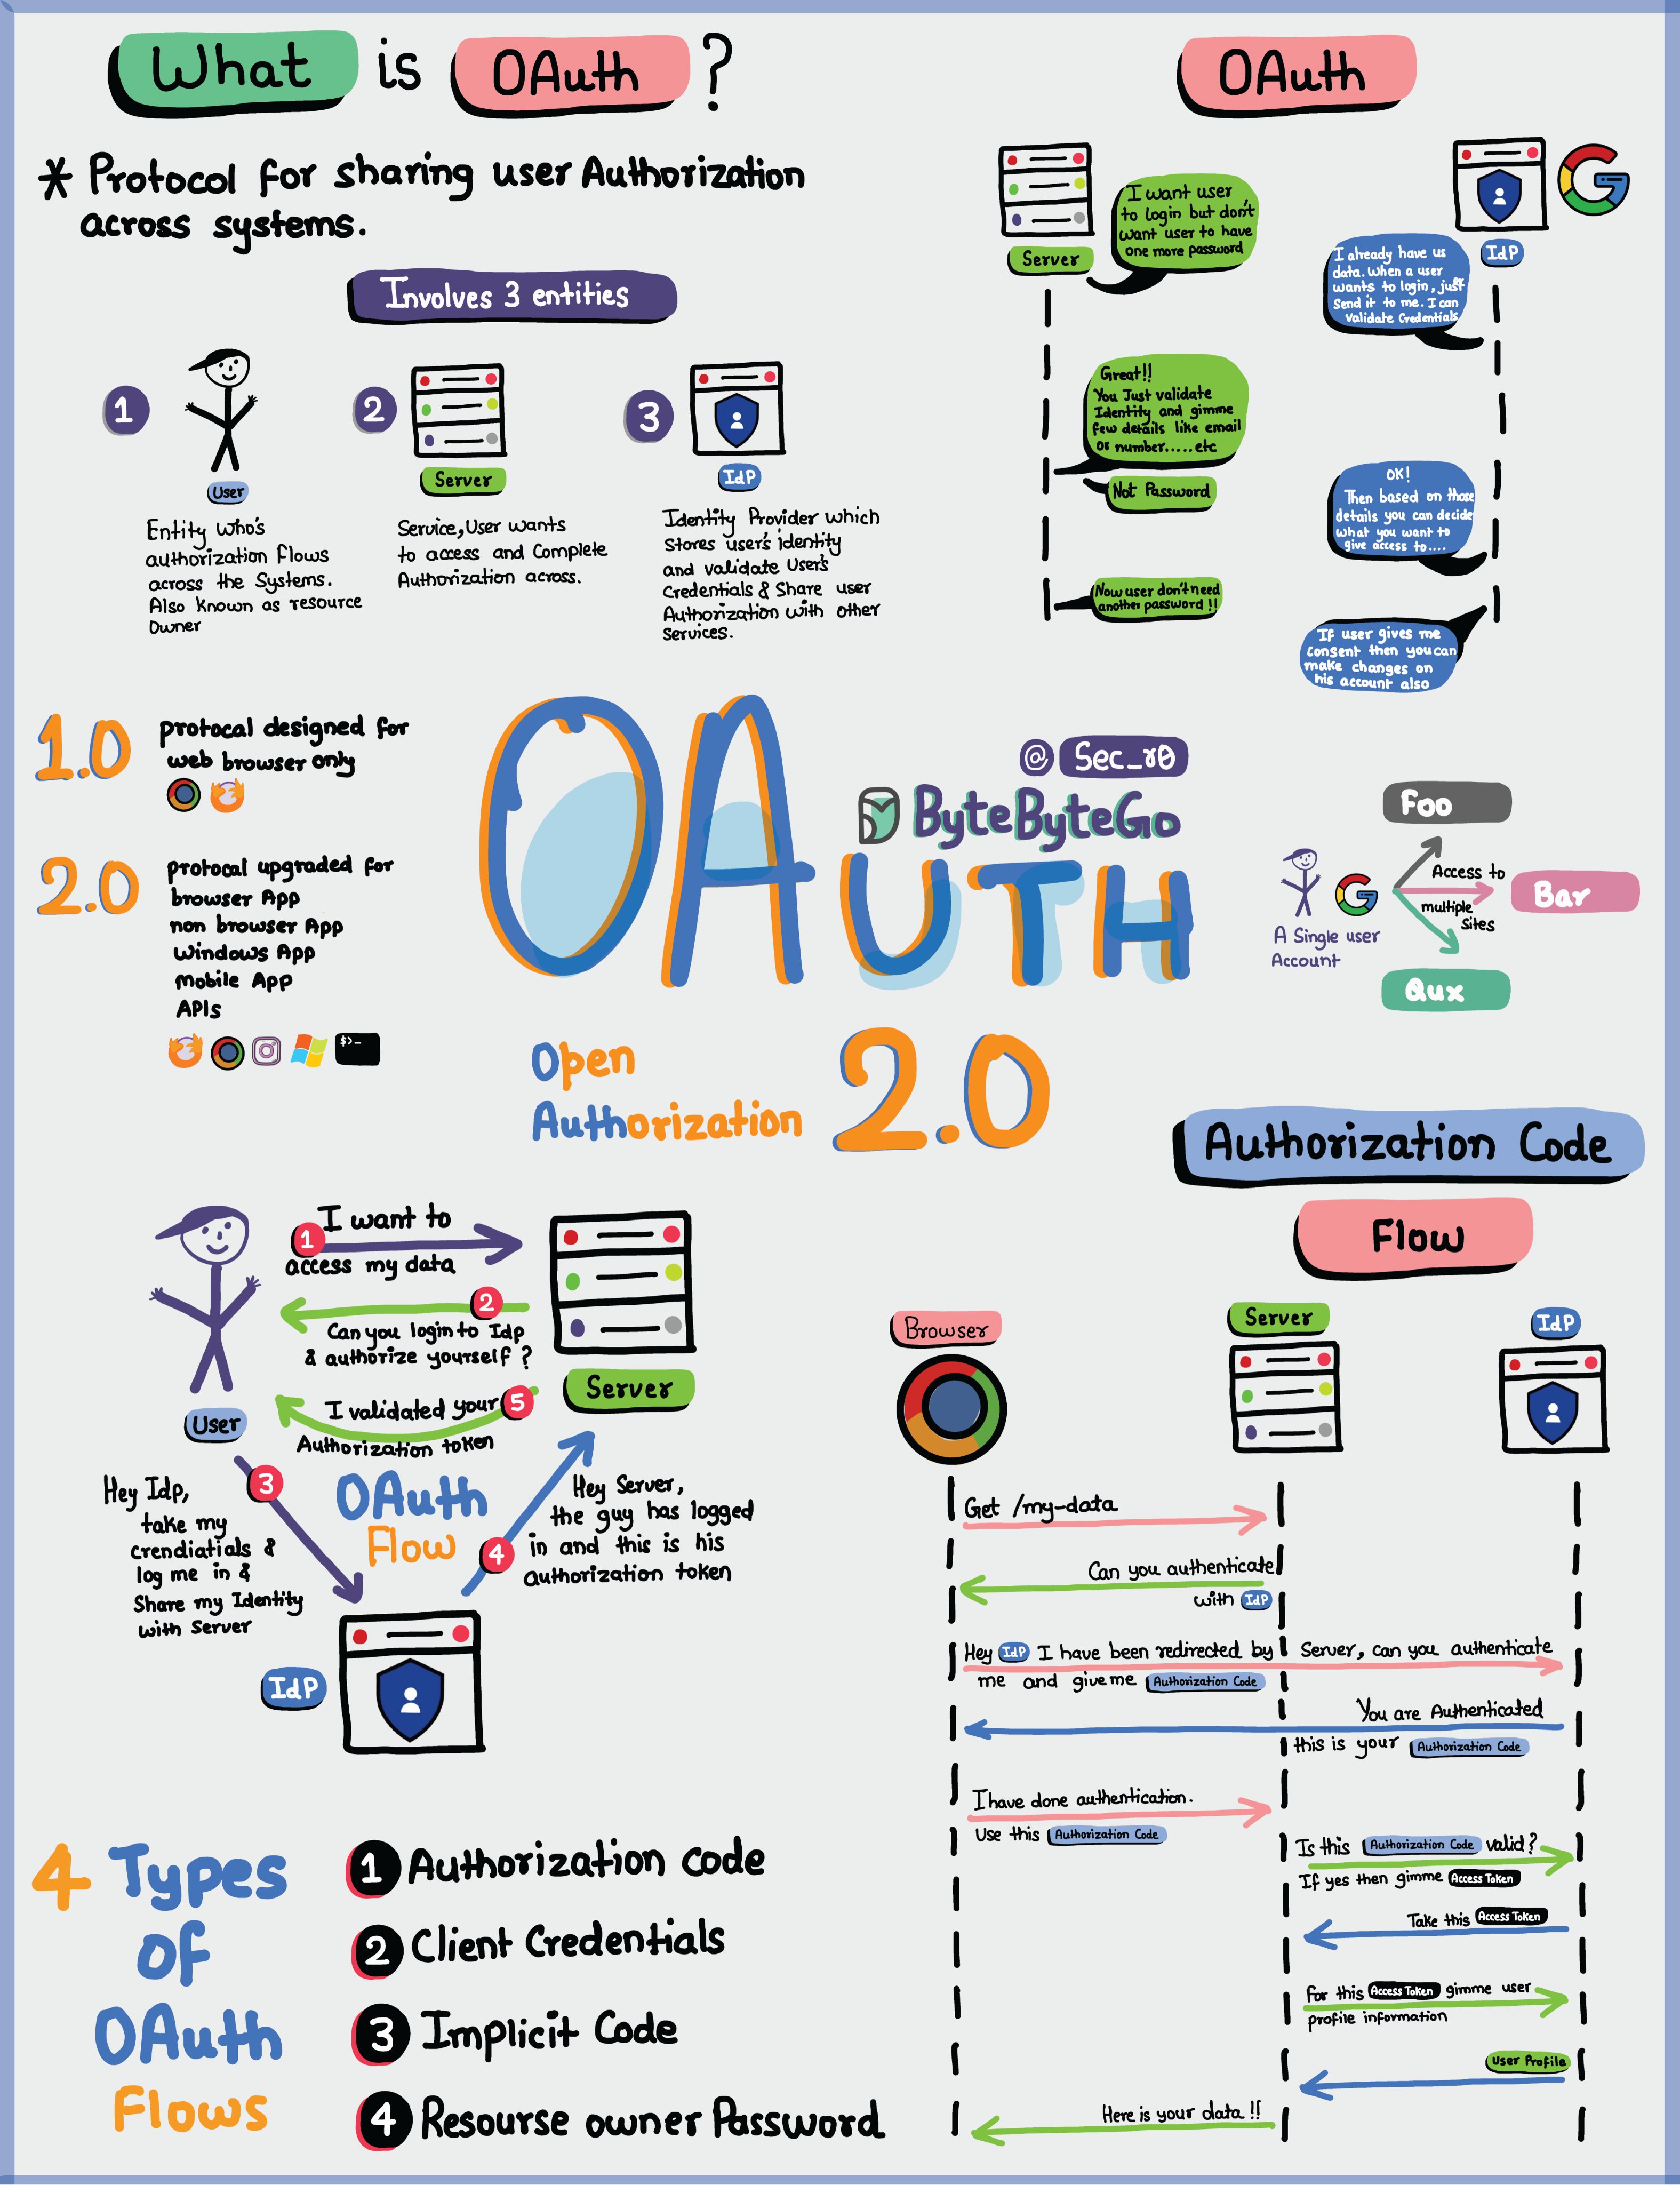 PDF] The OAuth 2.0 Authorization Framework: Bearer Token Usage